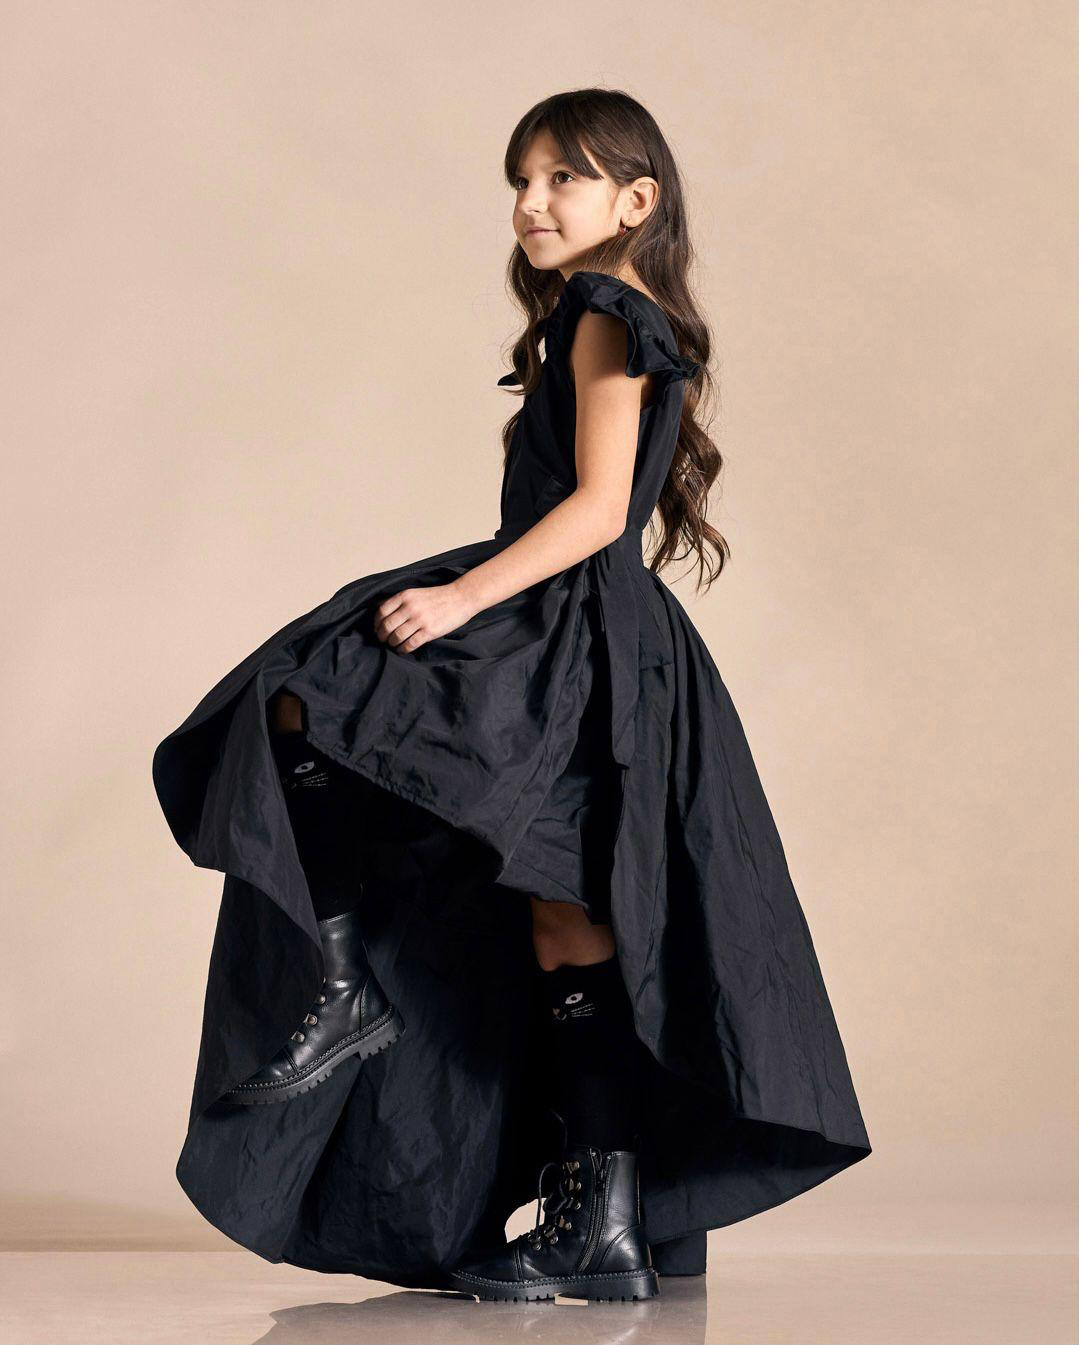 Little girl wearing a long black dress, striking a pose